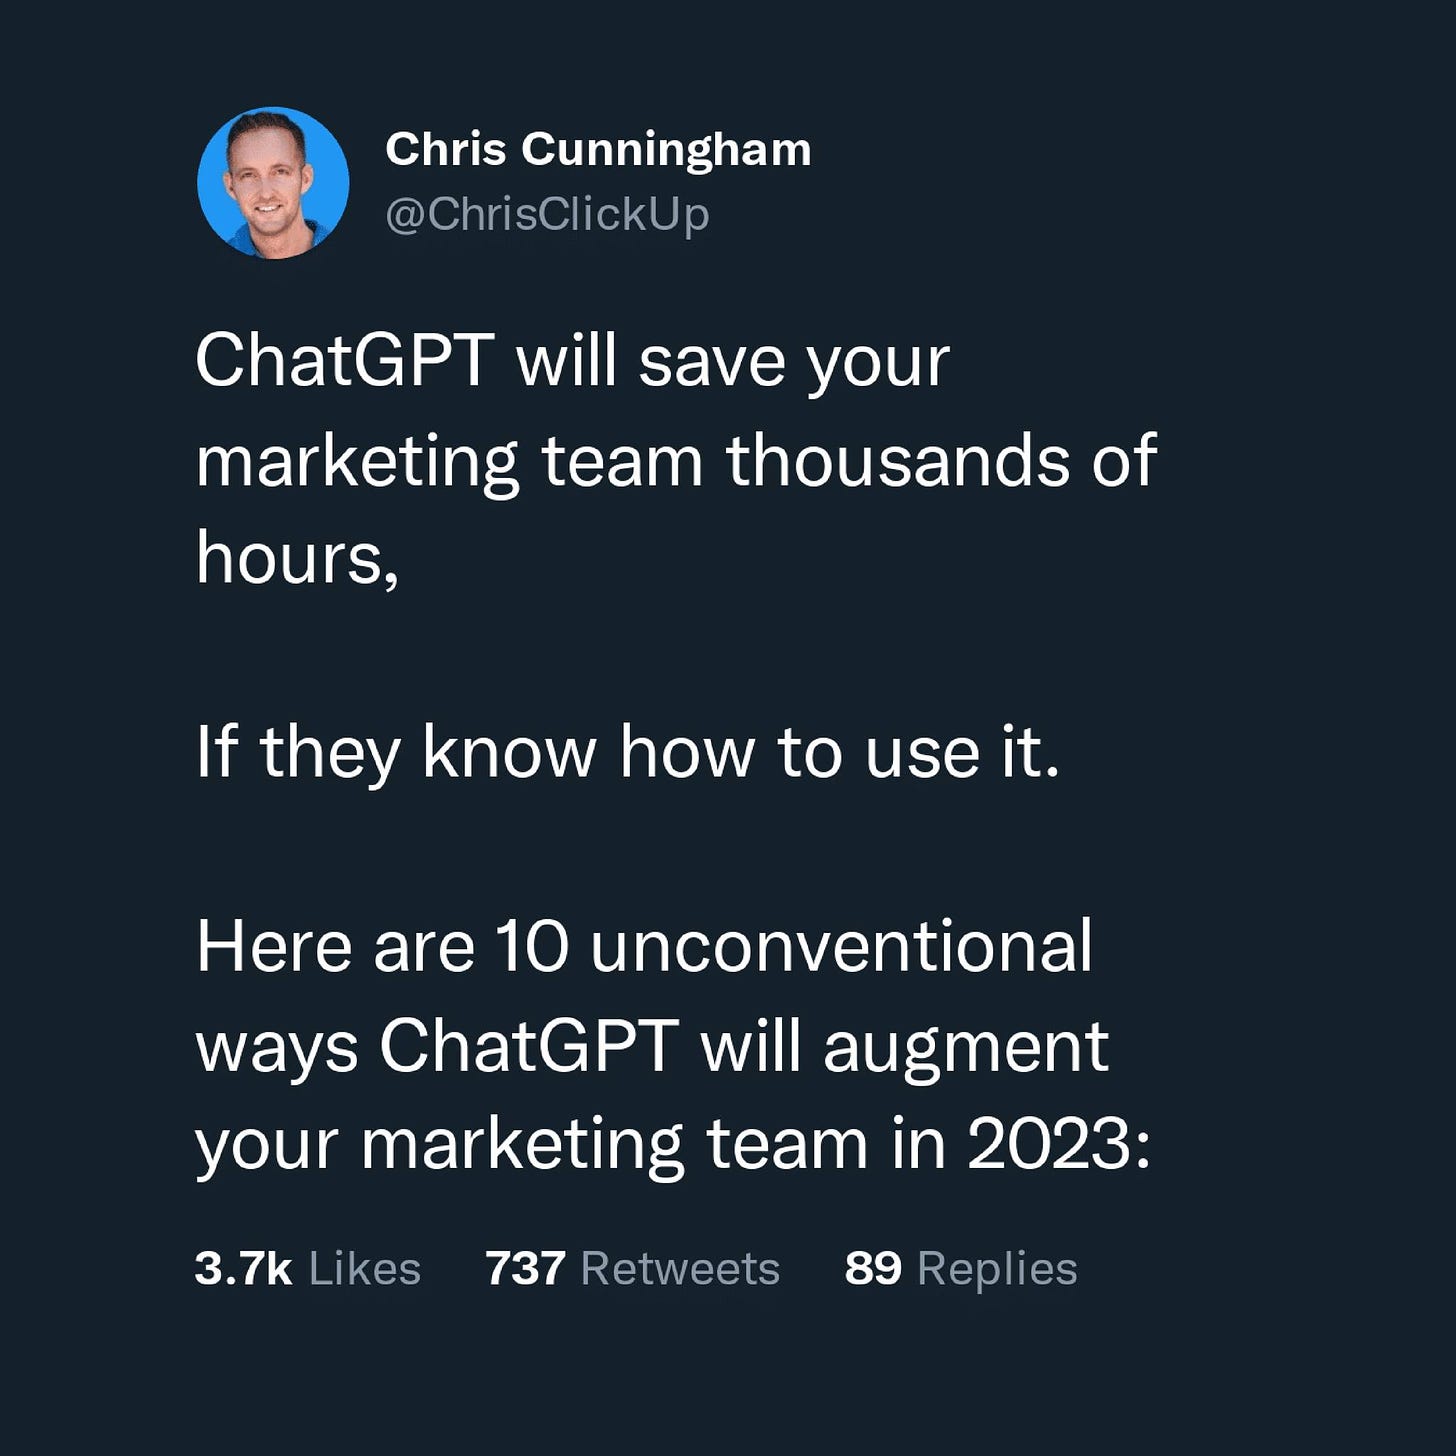 Có thể là ảnh chụp màn hình Twitter về 1 người và văn bản cho biết 'Chris Cunningham @ChrisClickUp ChatGPT will save your marketing team thousands of hours If they know how to use it. Here are 10 unconventional ways ChatGPT will augment your marketing team in 2023: 3.7k Likes 737 Retweets 89 Replies'